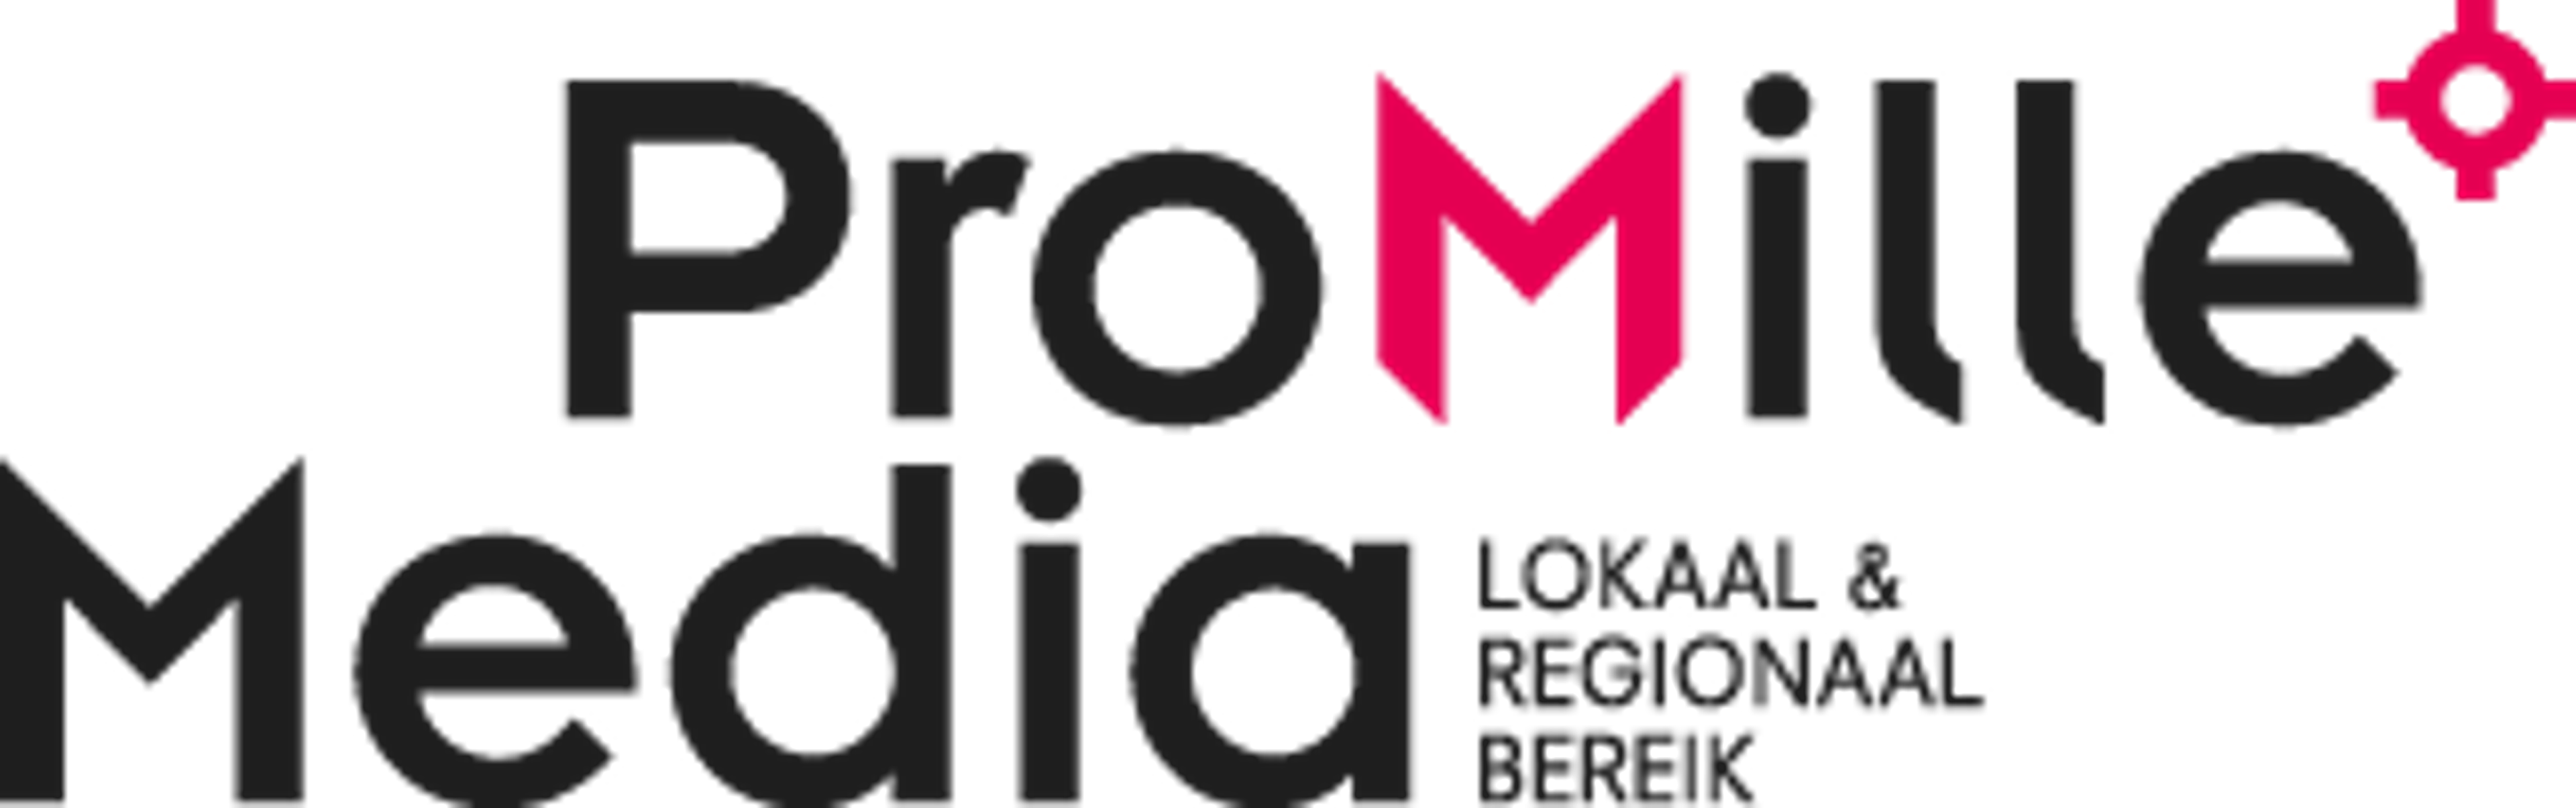 ProMille Media: nieuw advertentieloket voor regionale en lokale media